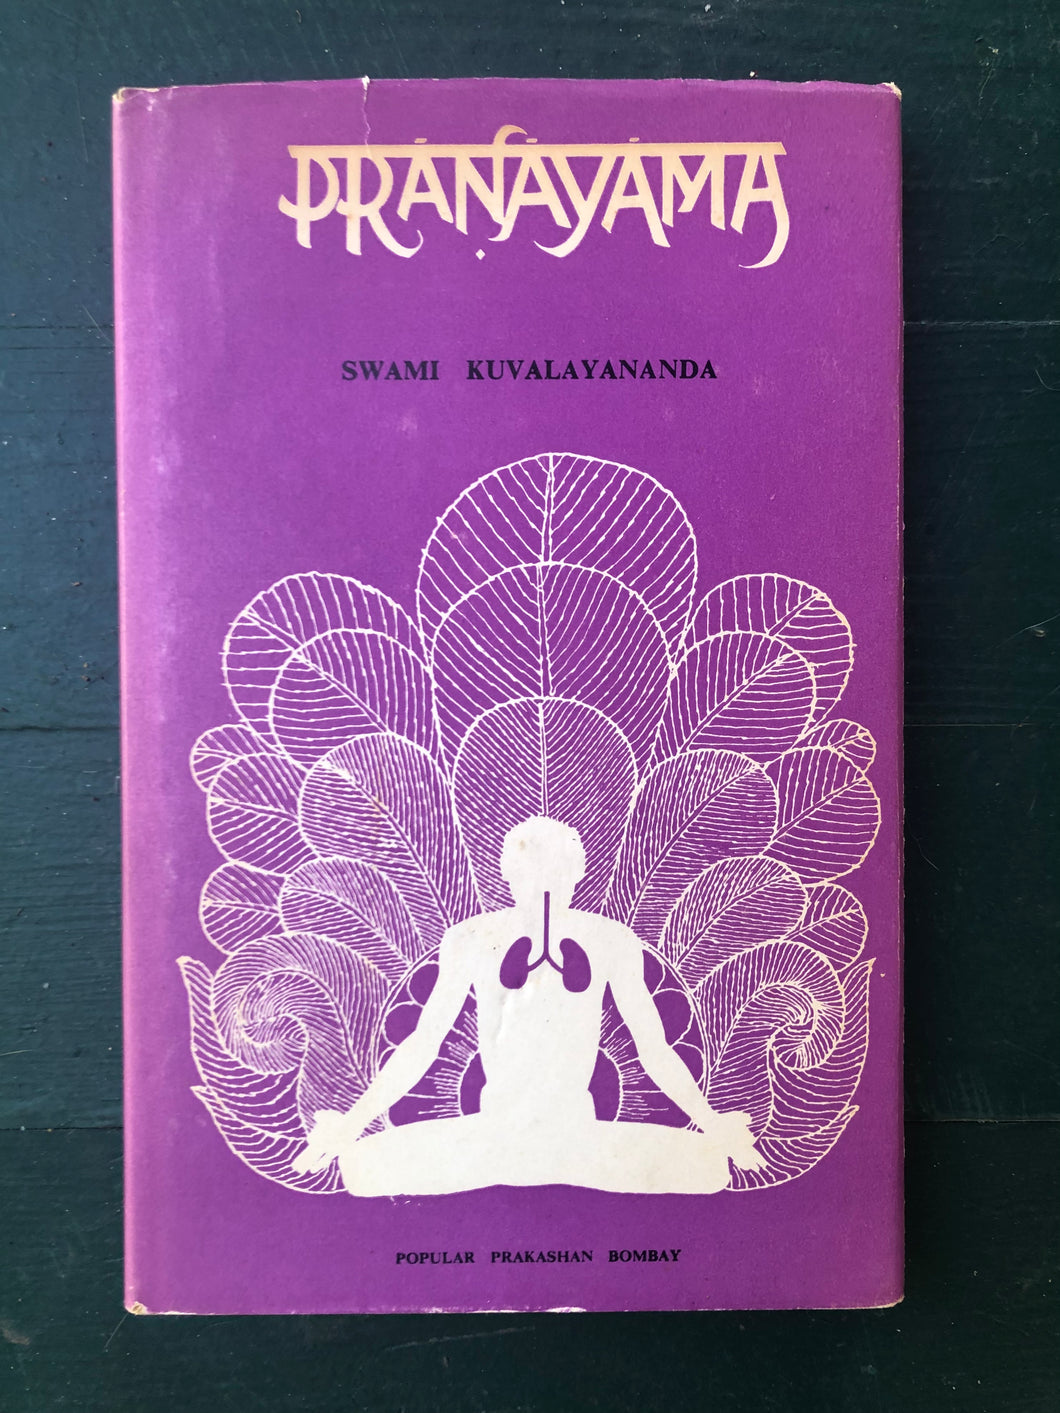 Pranayama. by Swami Kuvalayananda